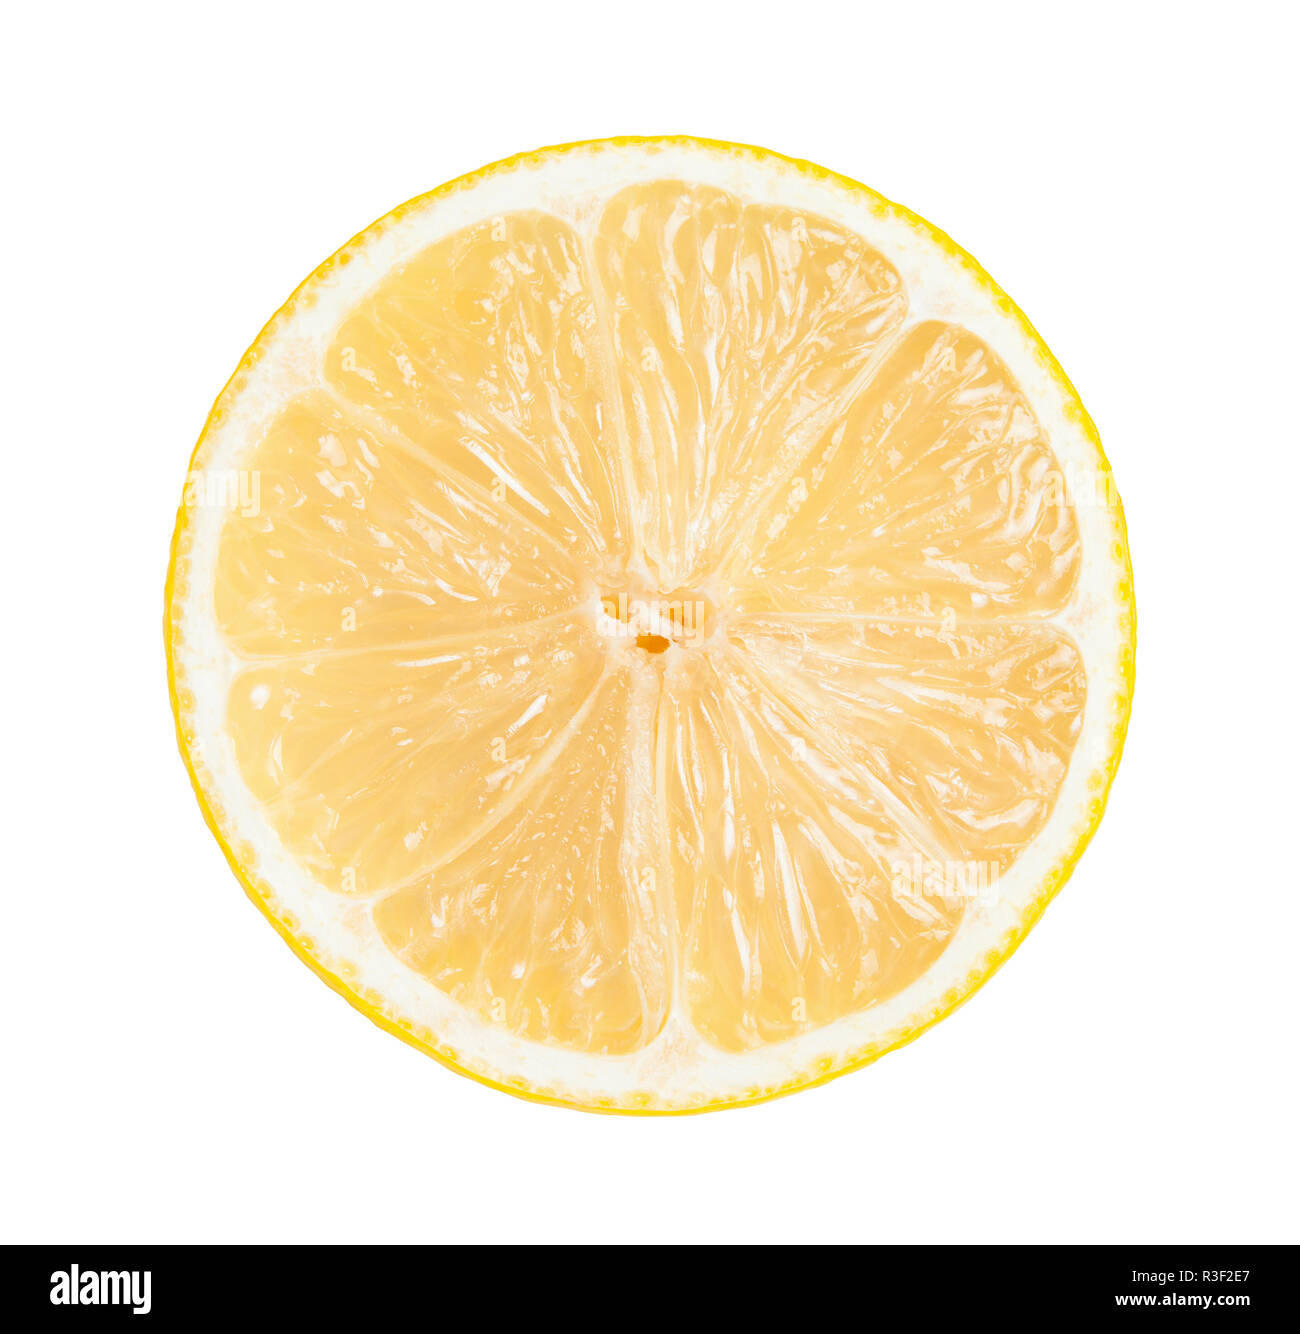 Lemon. Ripe lemon in a cut isolated on white background Stock Photo